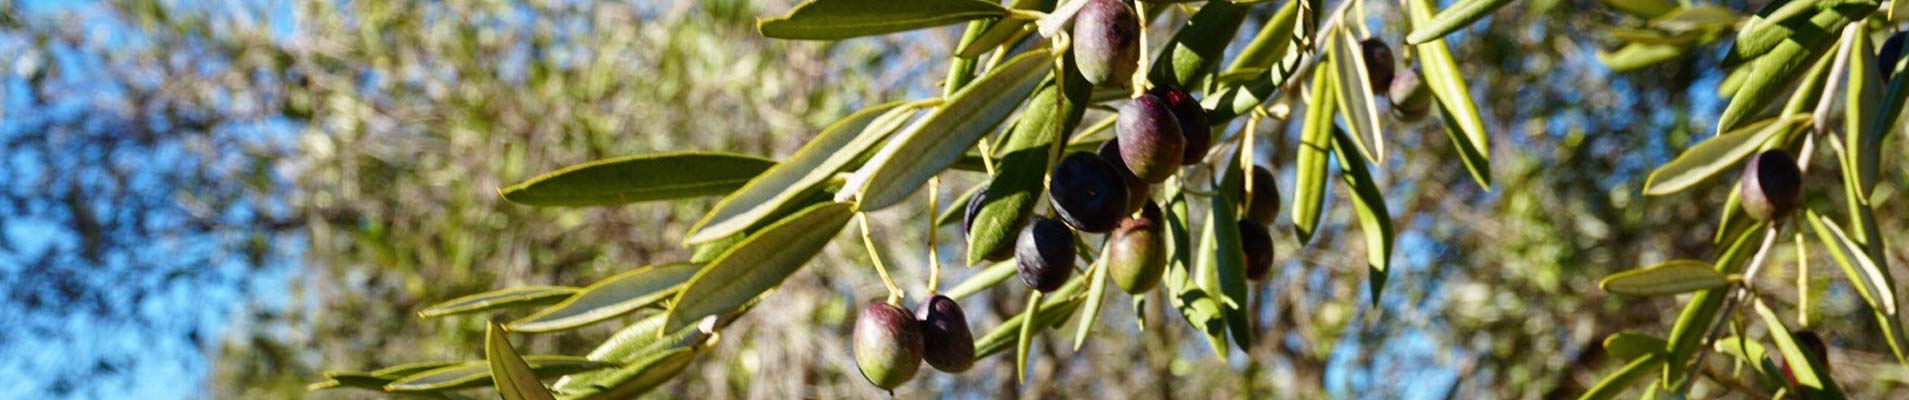 olives adelaide